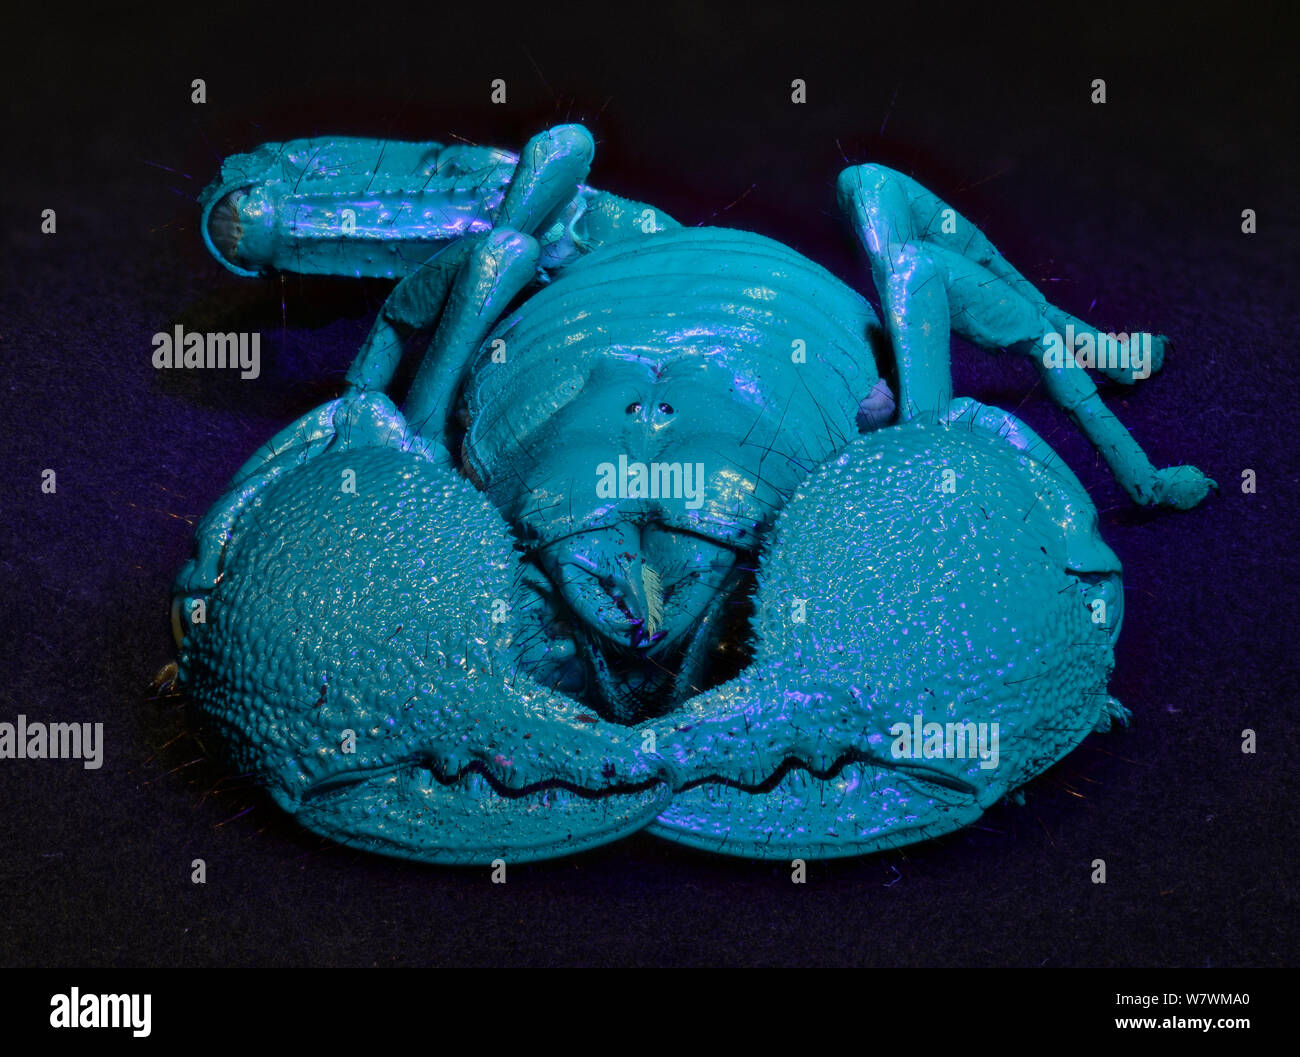 Emperor scorpion (Pandinus imperator) glowing blue under UV light, captive Stock Photo